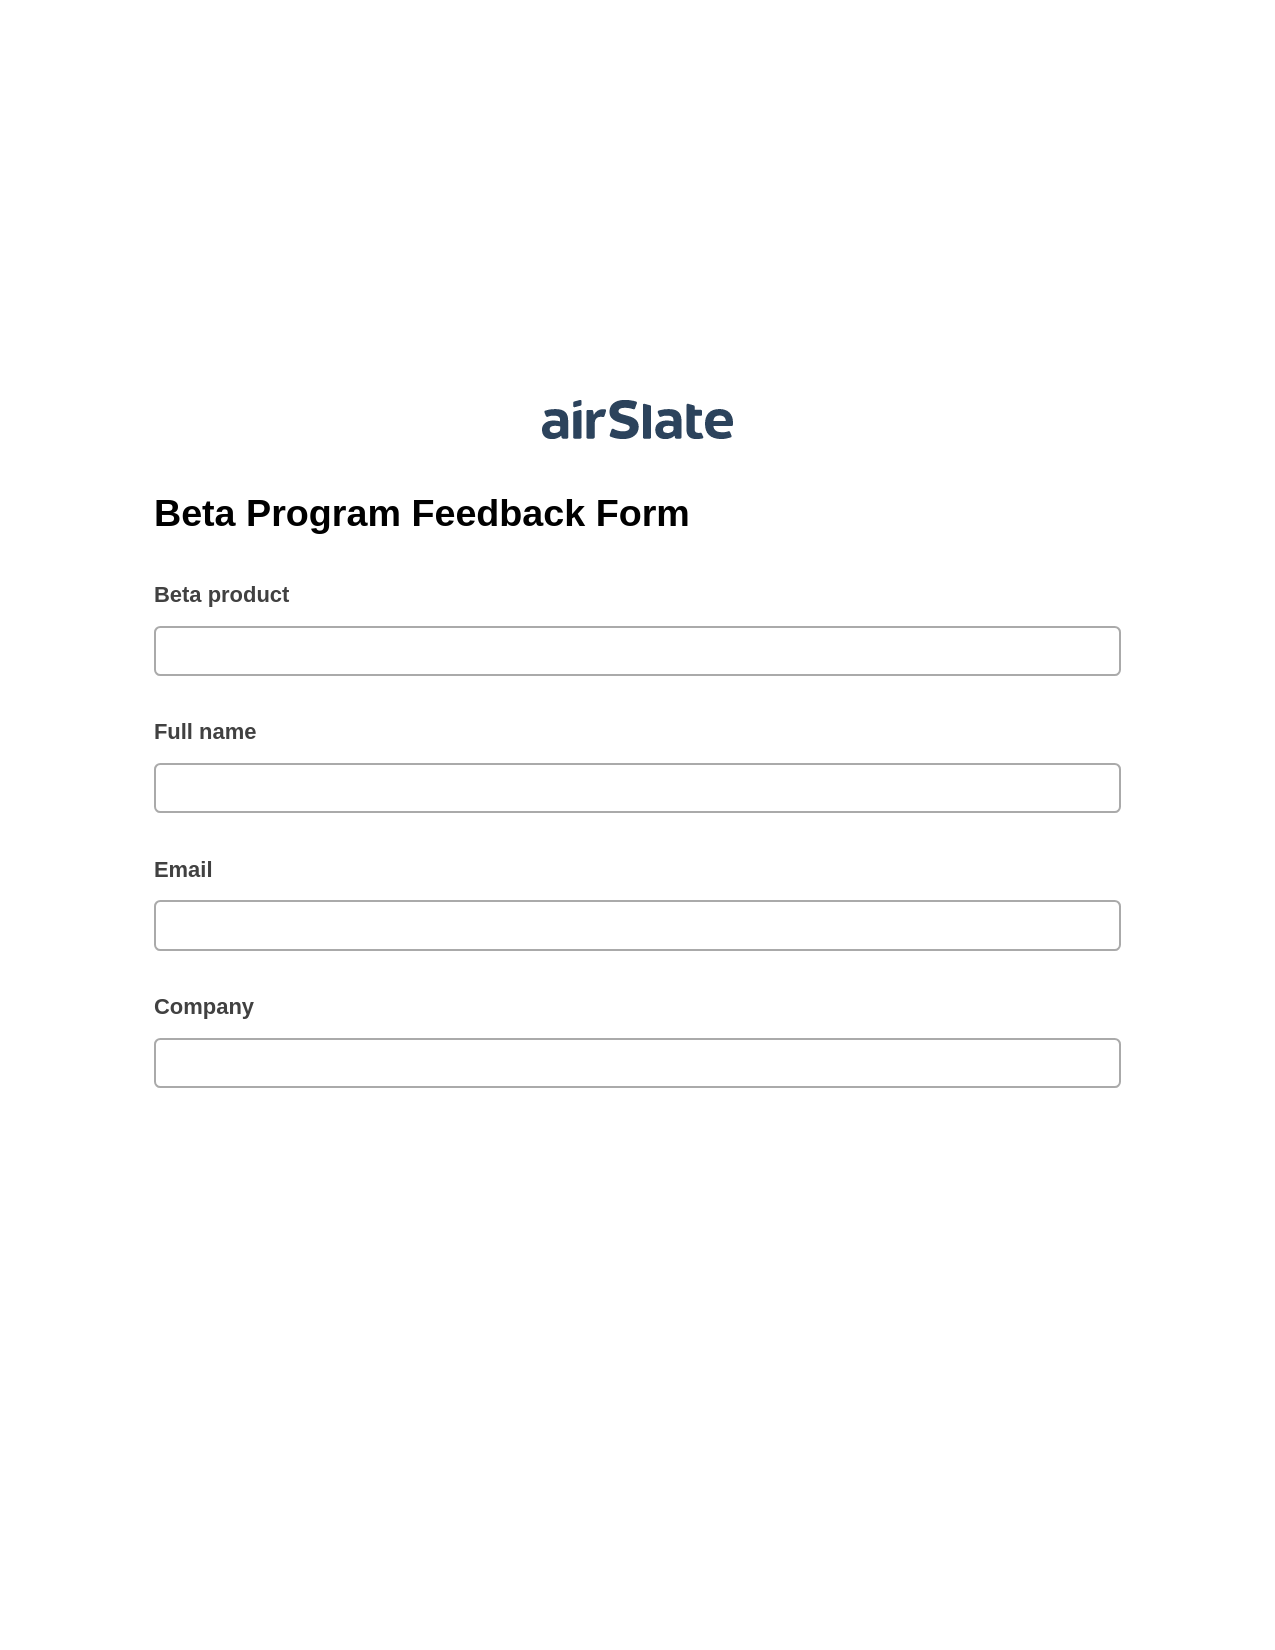 Beta Program Feedback Form Pre-fill from CSV File Bot, Slack Notification Bot, Export to Excel 365 Bot